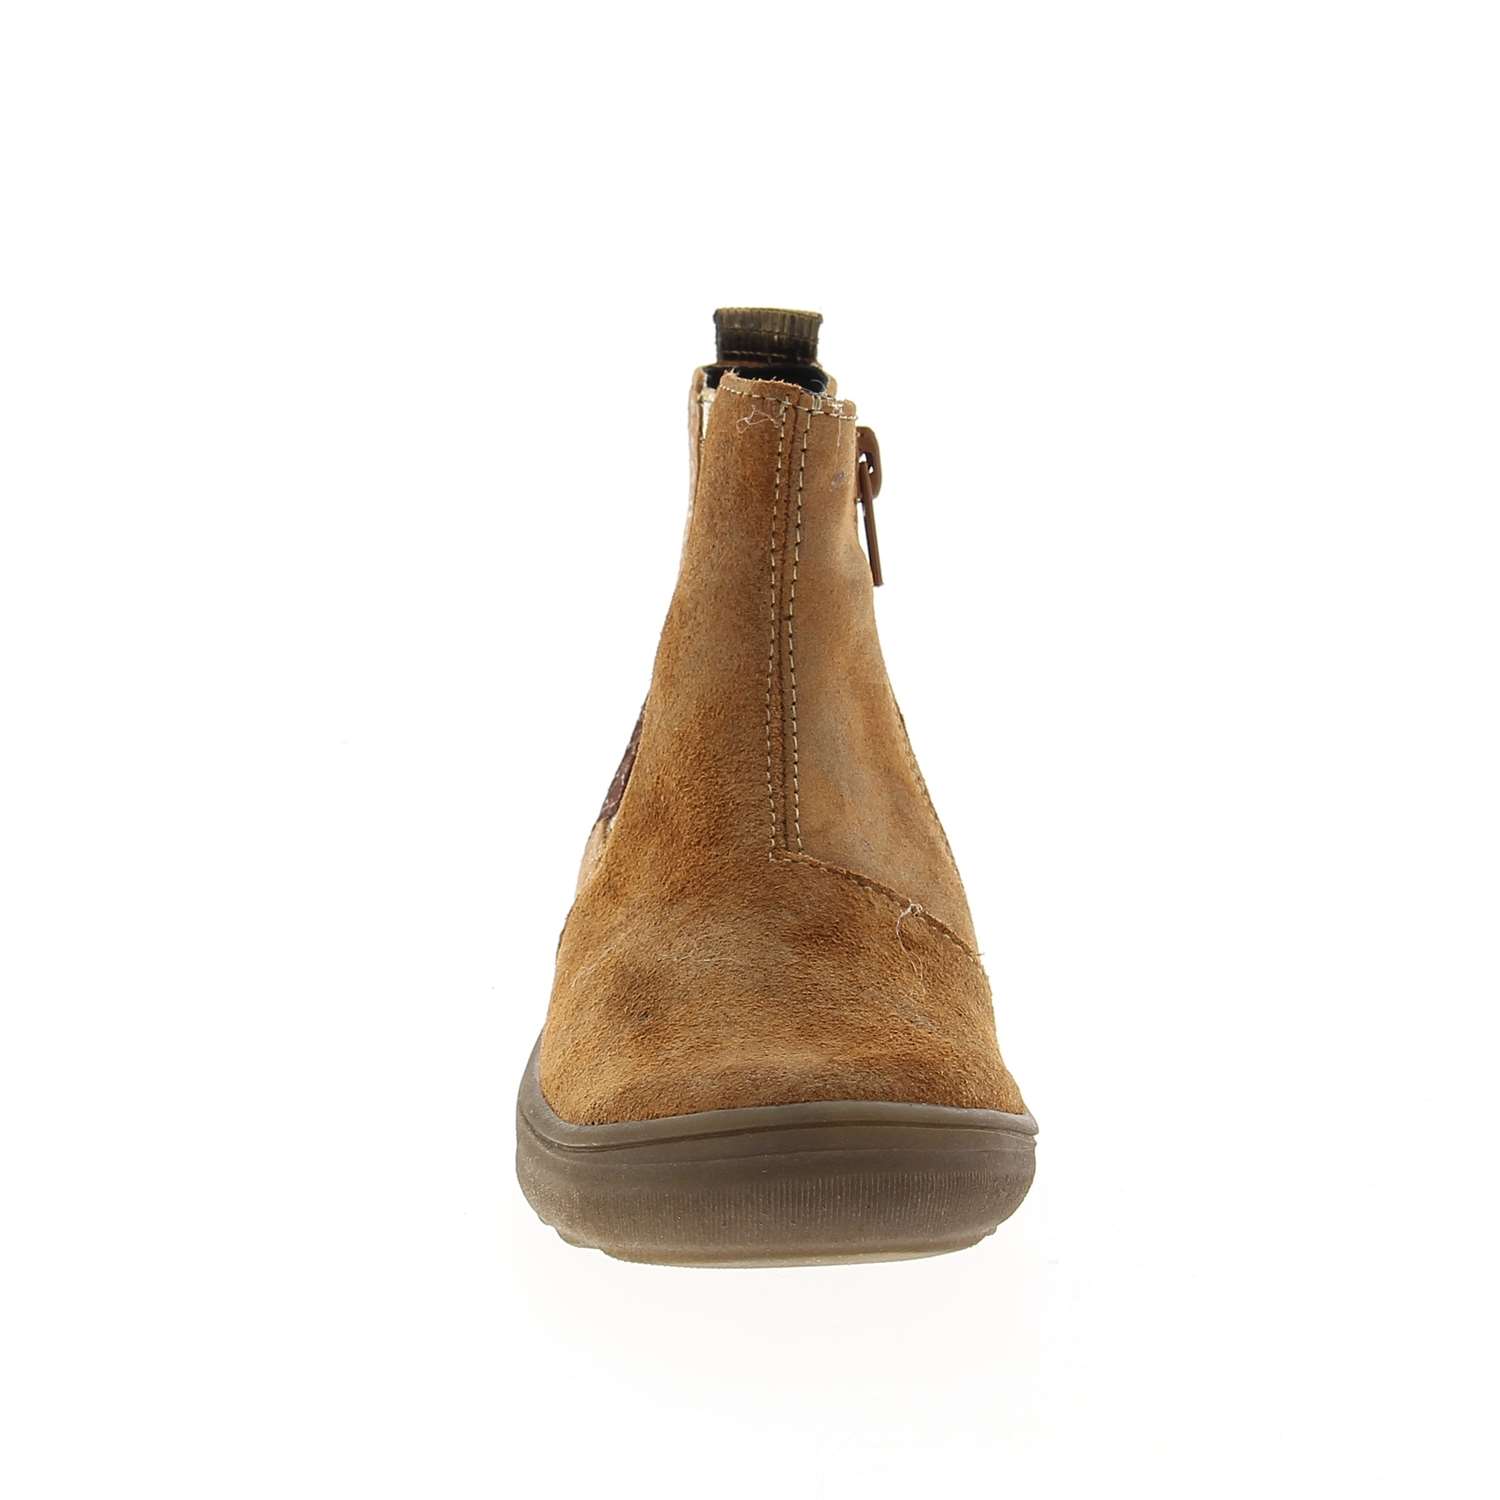 03 - SAMALAC - BOPY - Boots et bottines - Cuir